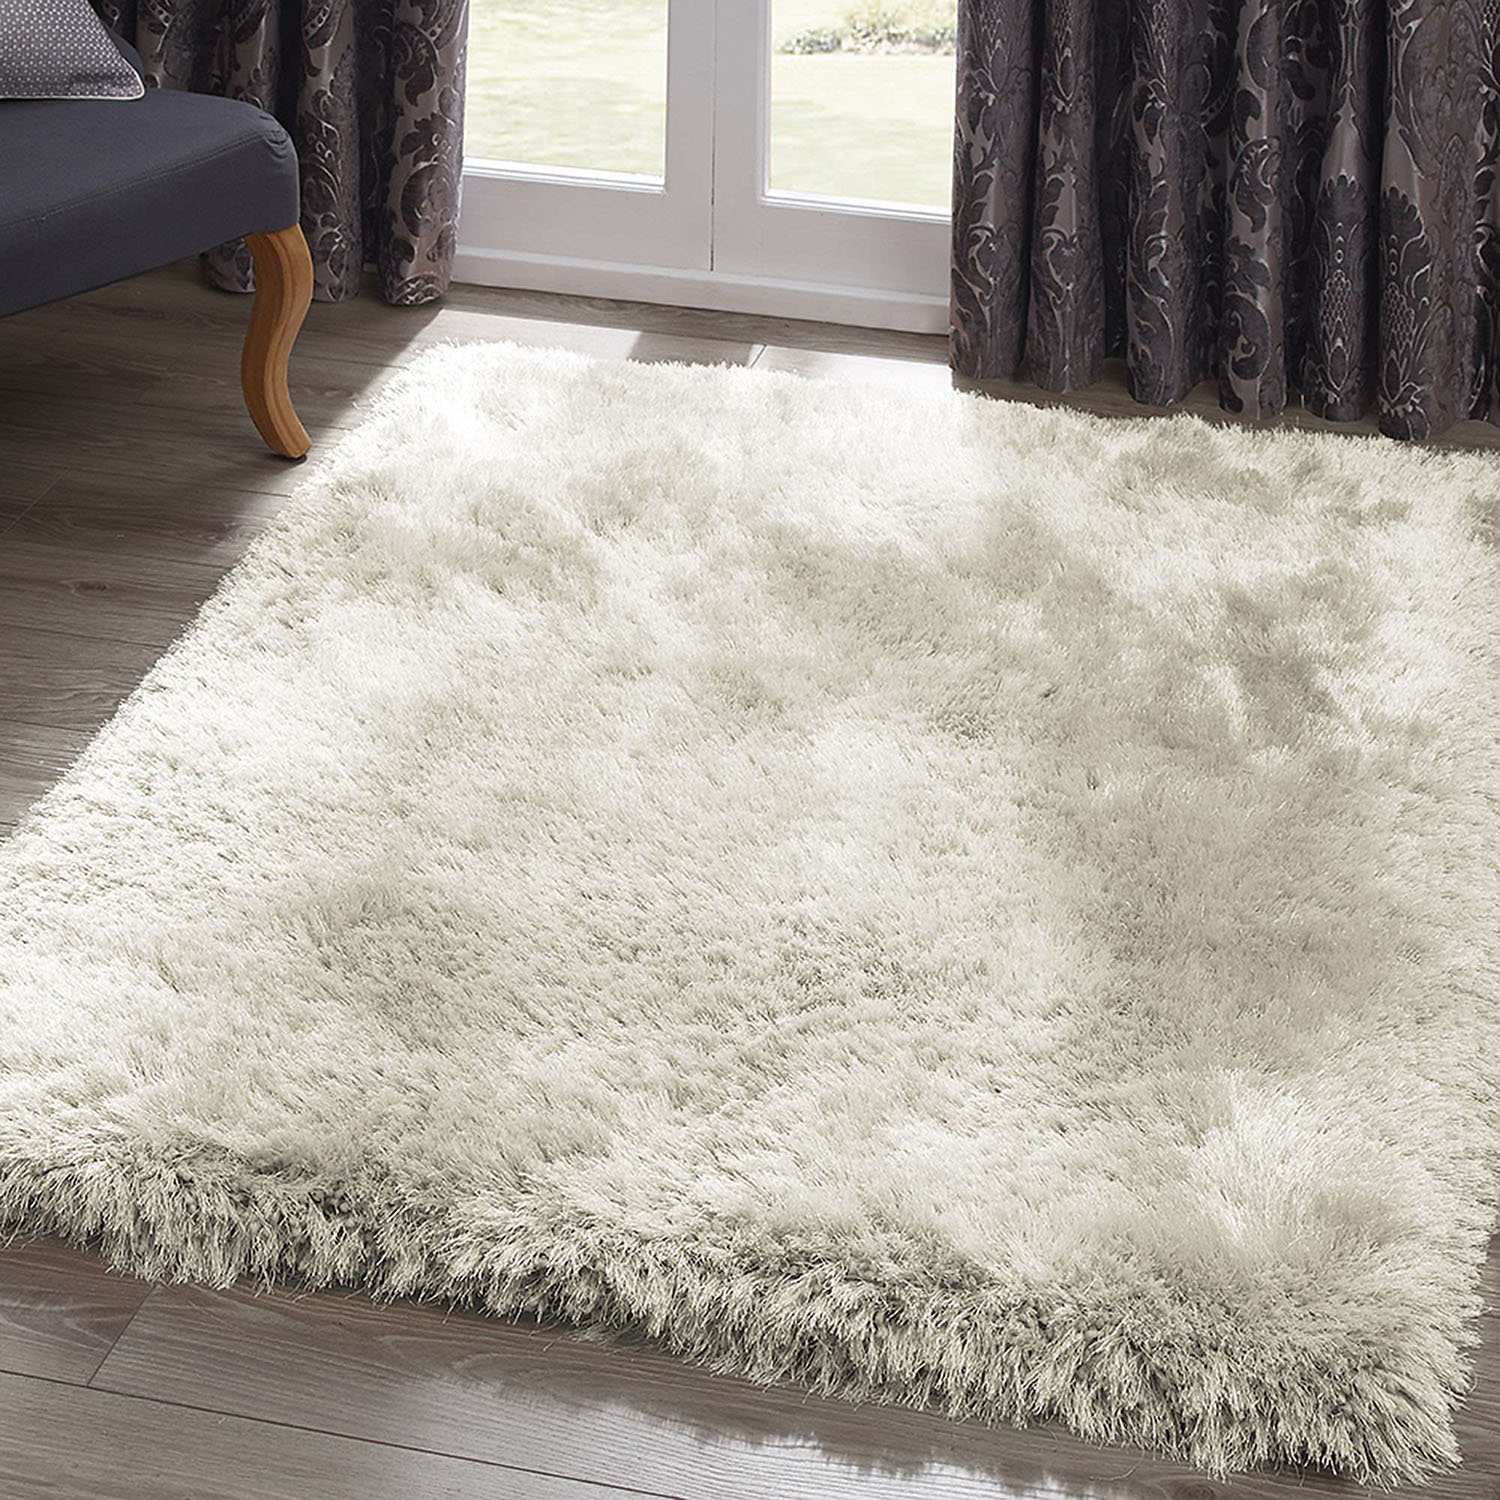 Shaggy carpets Send to a friend: Juwel deep pile carpet in ivory EQHBVKO